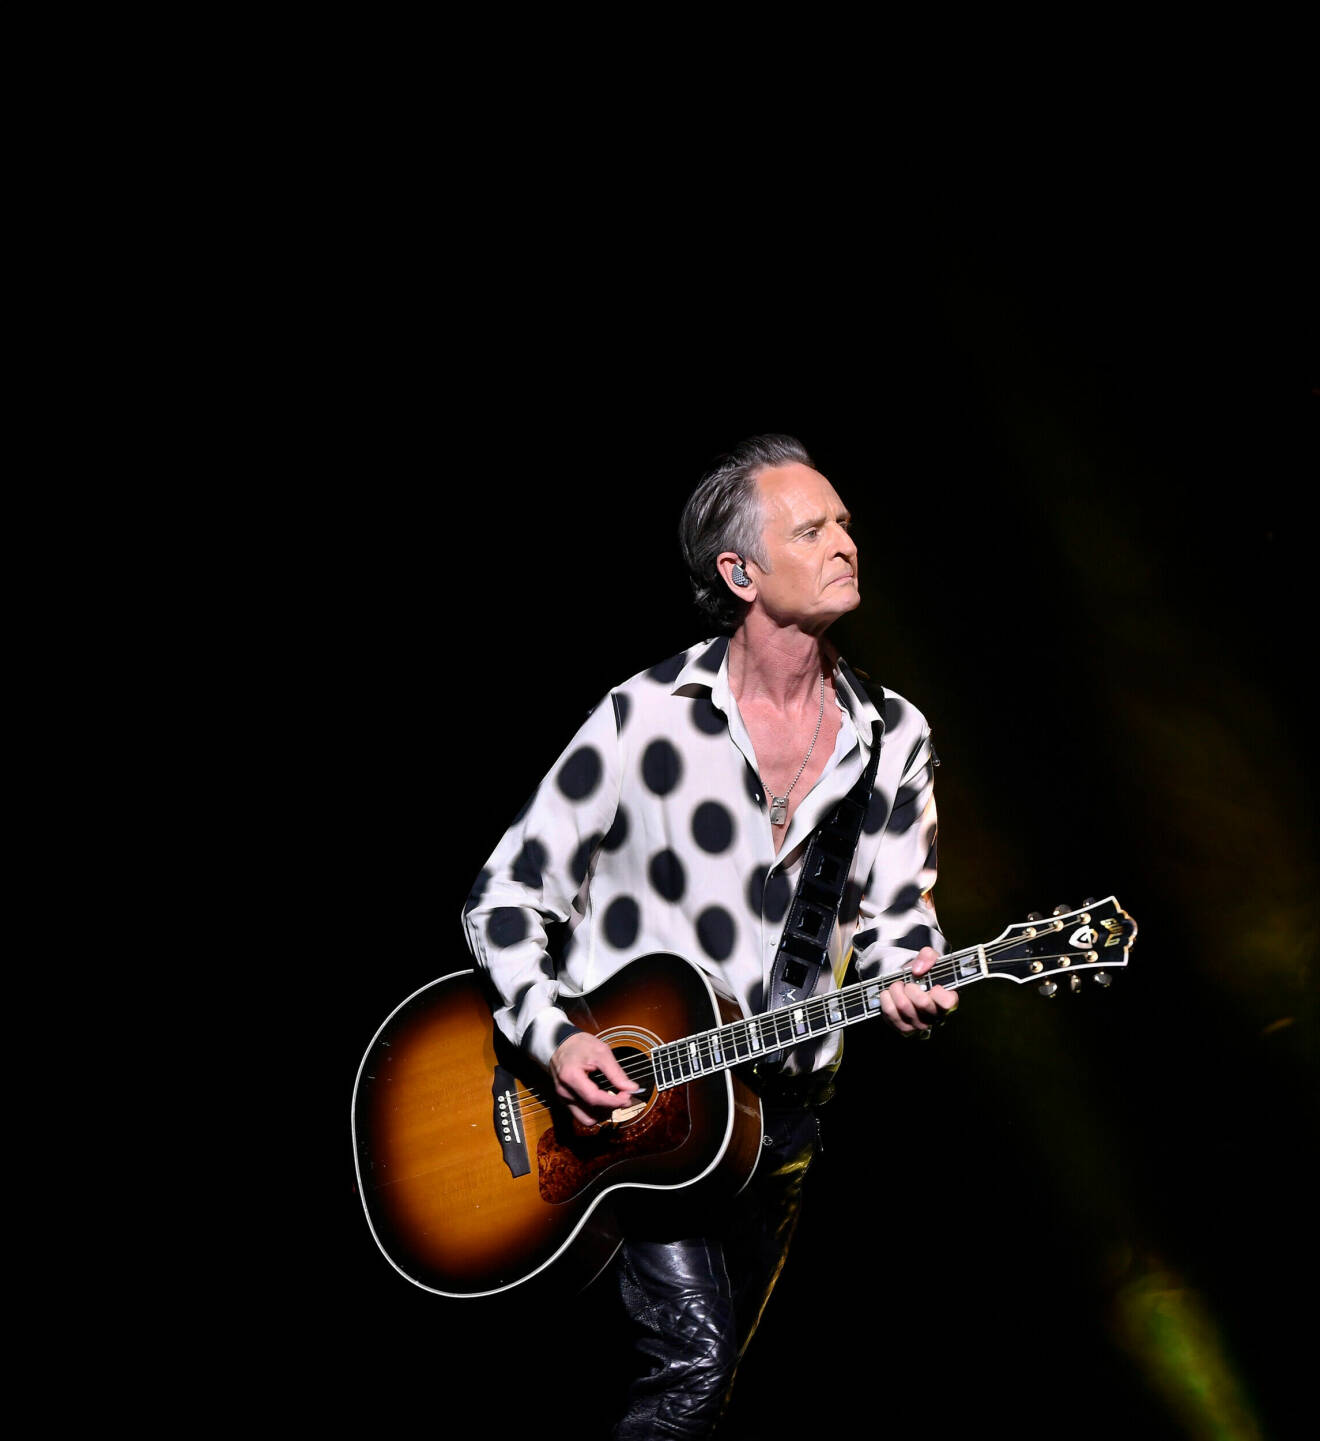 Artist på scen i prickig skjorta med gitarr.